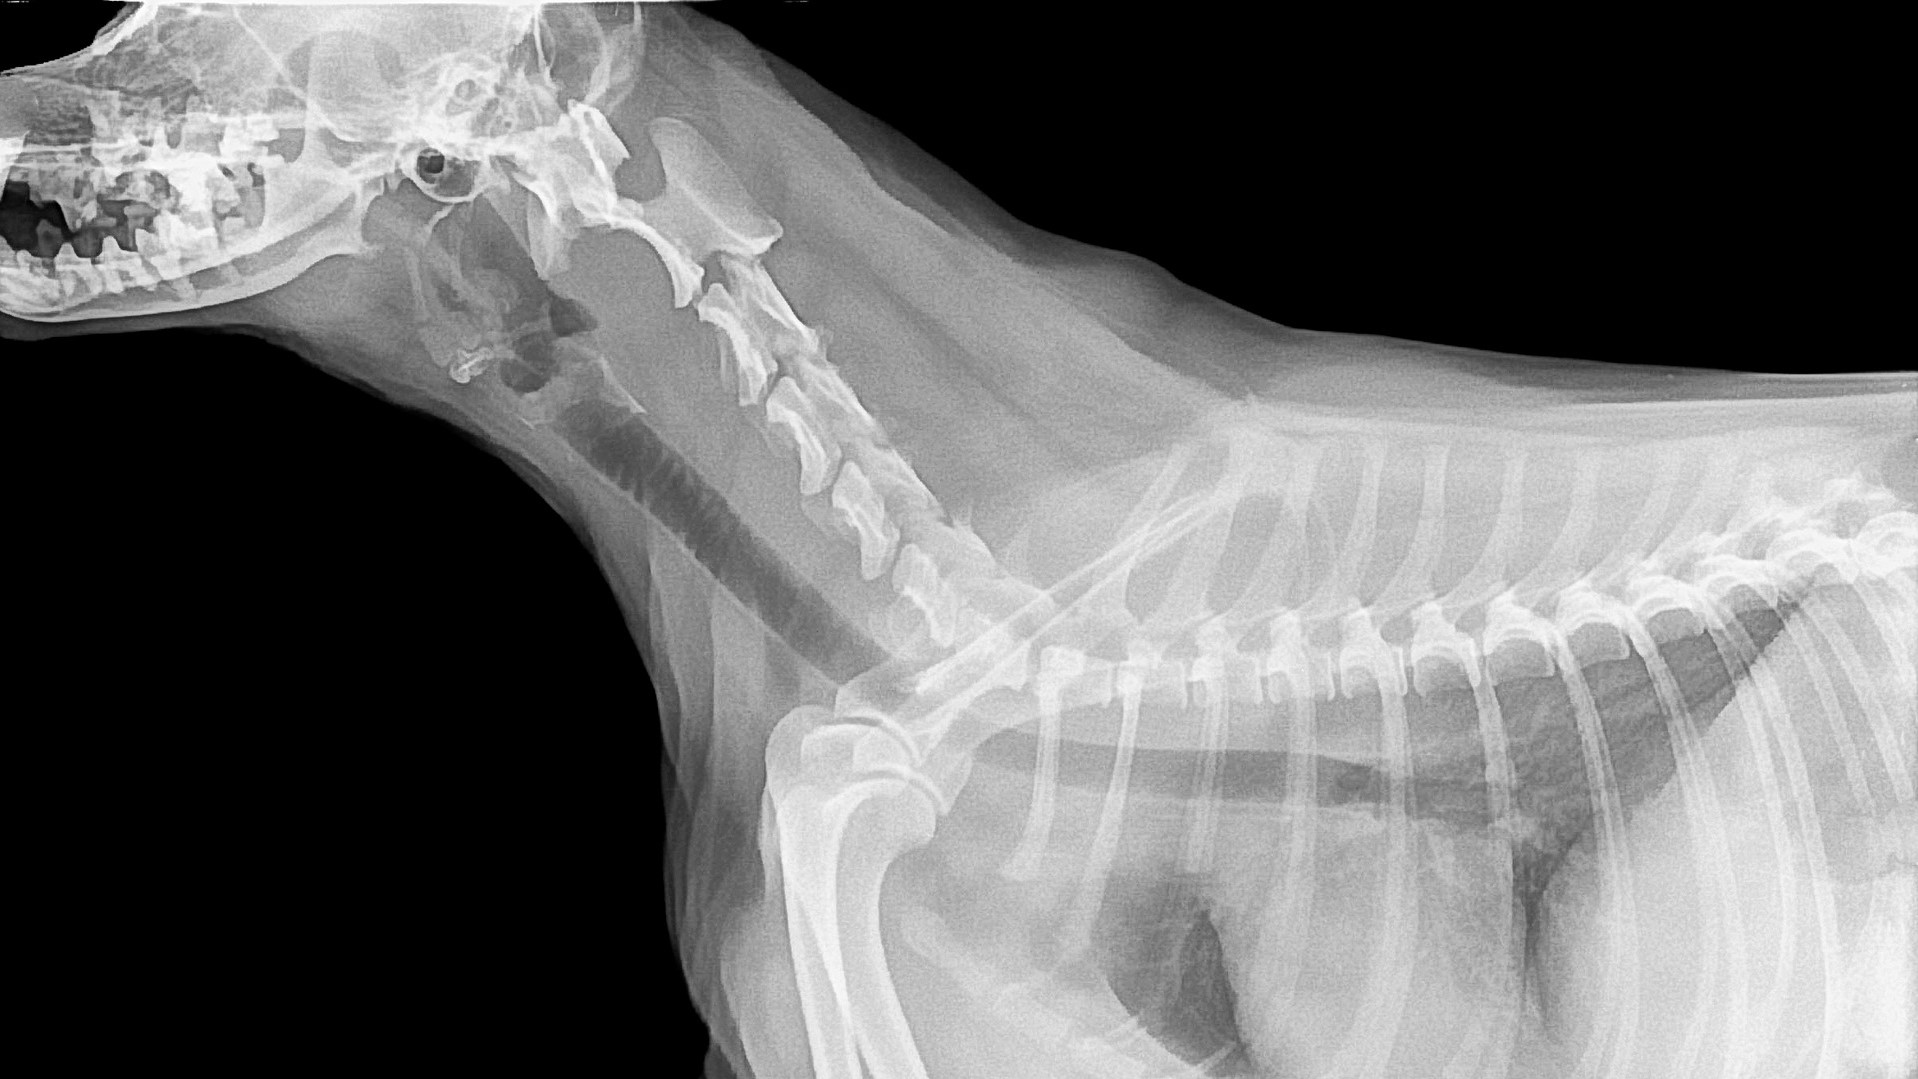 dog x ray